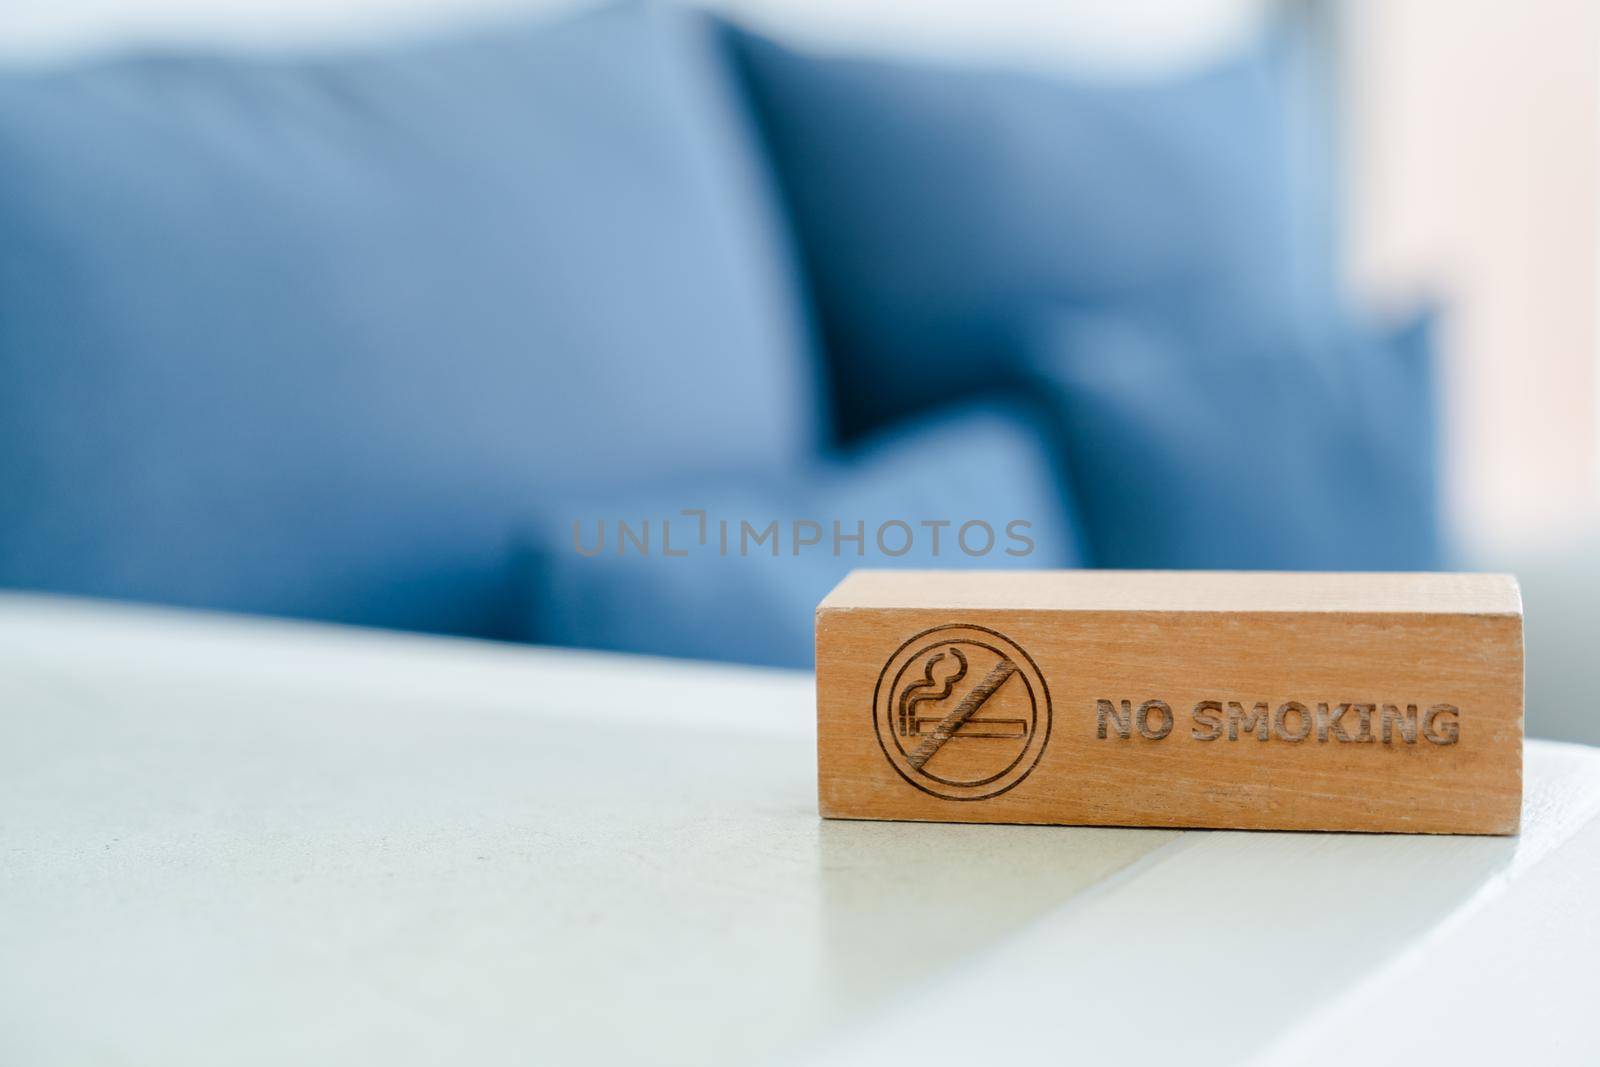 No smoking sign written on wood panel.